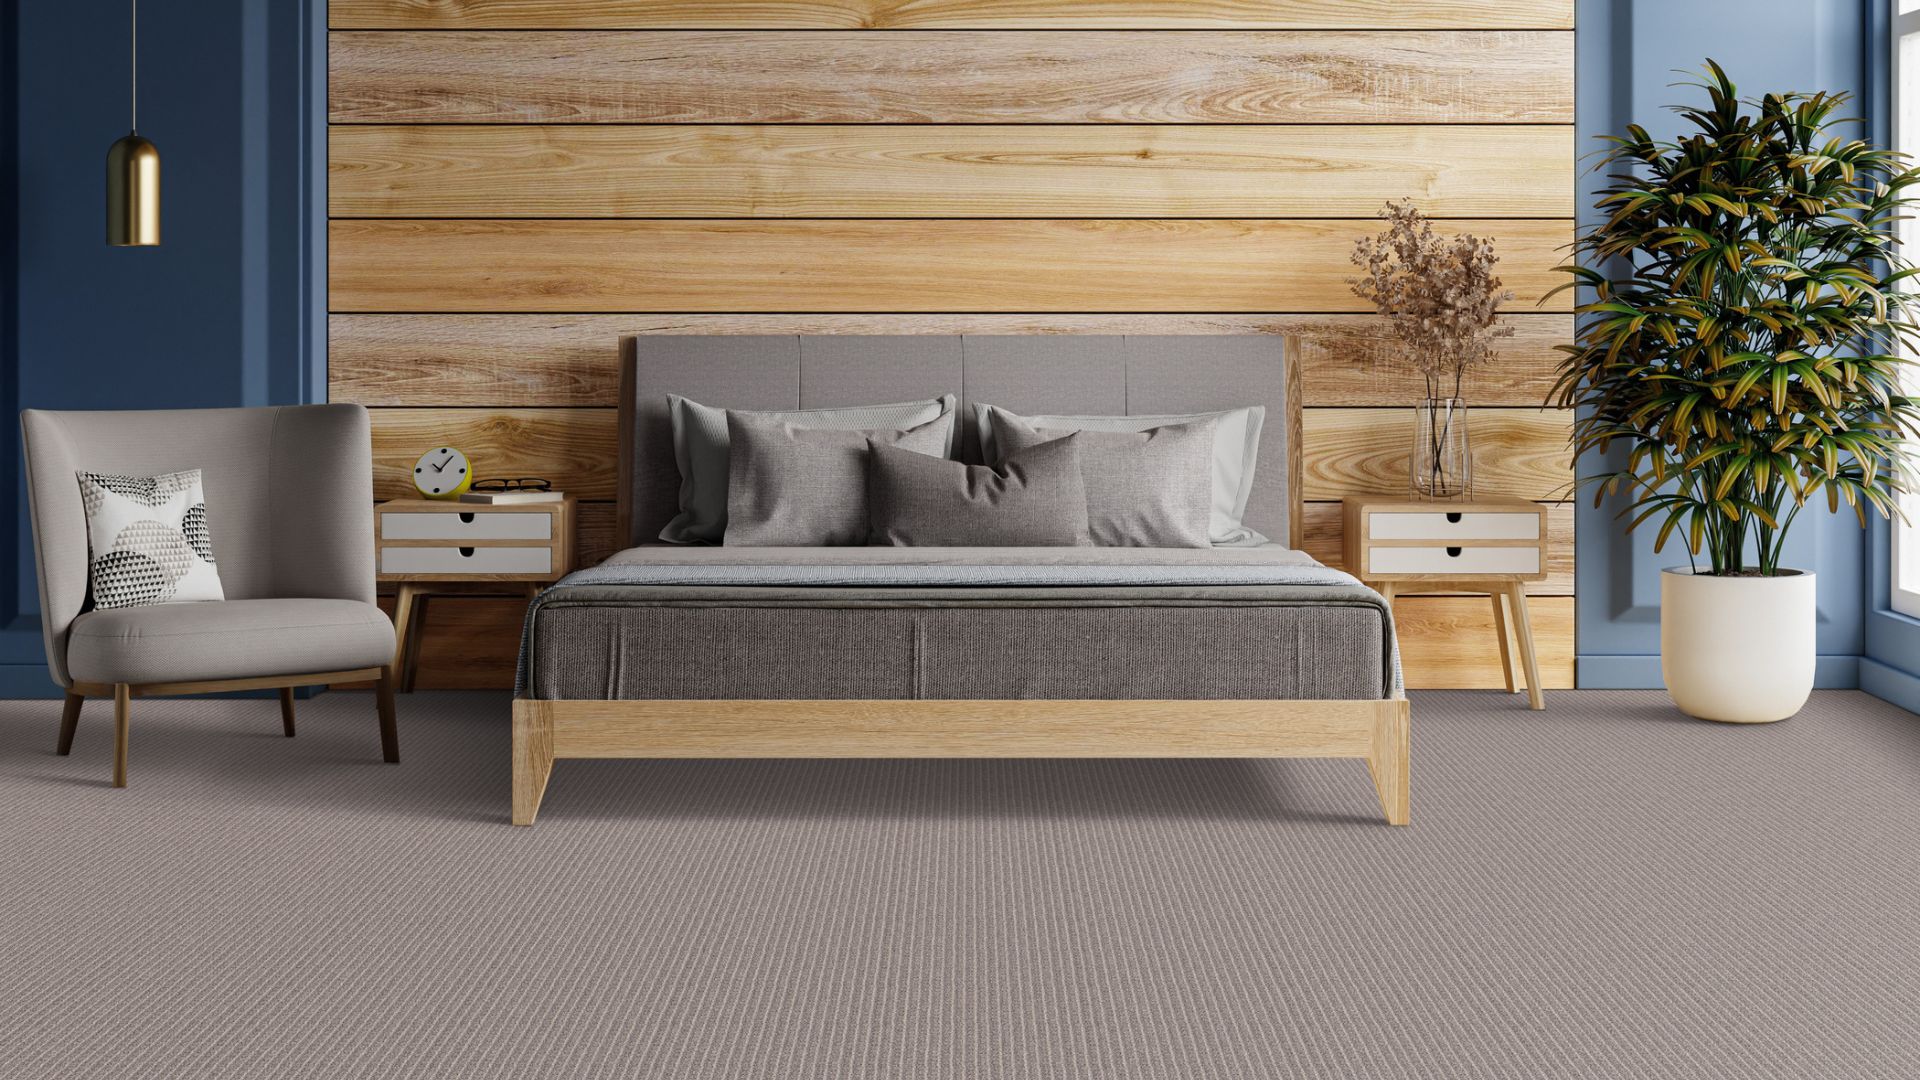 Gray carpet in a modern bedroom.